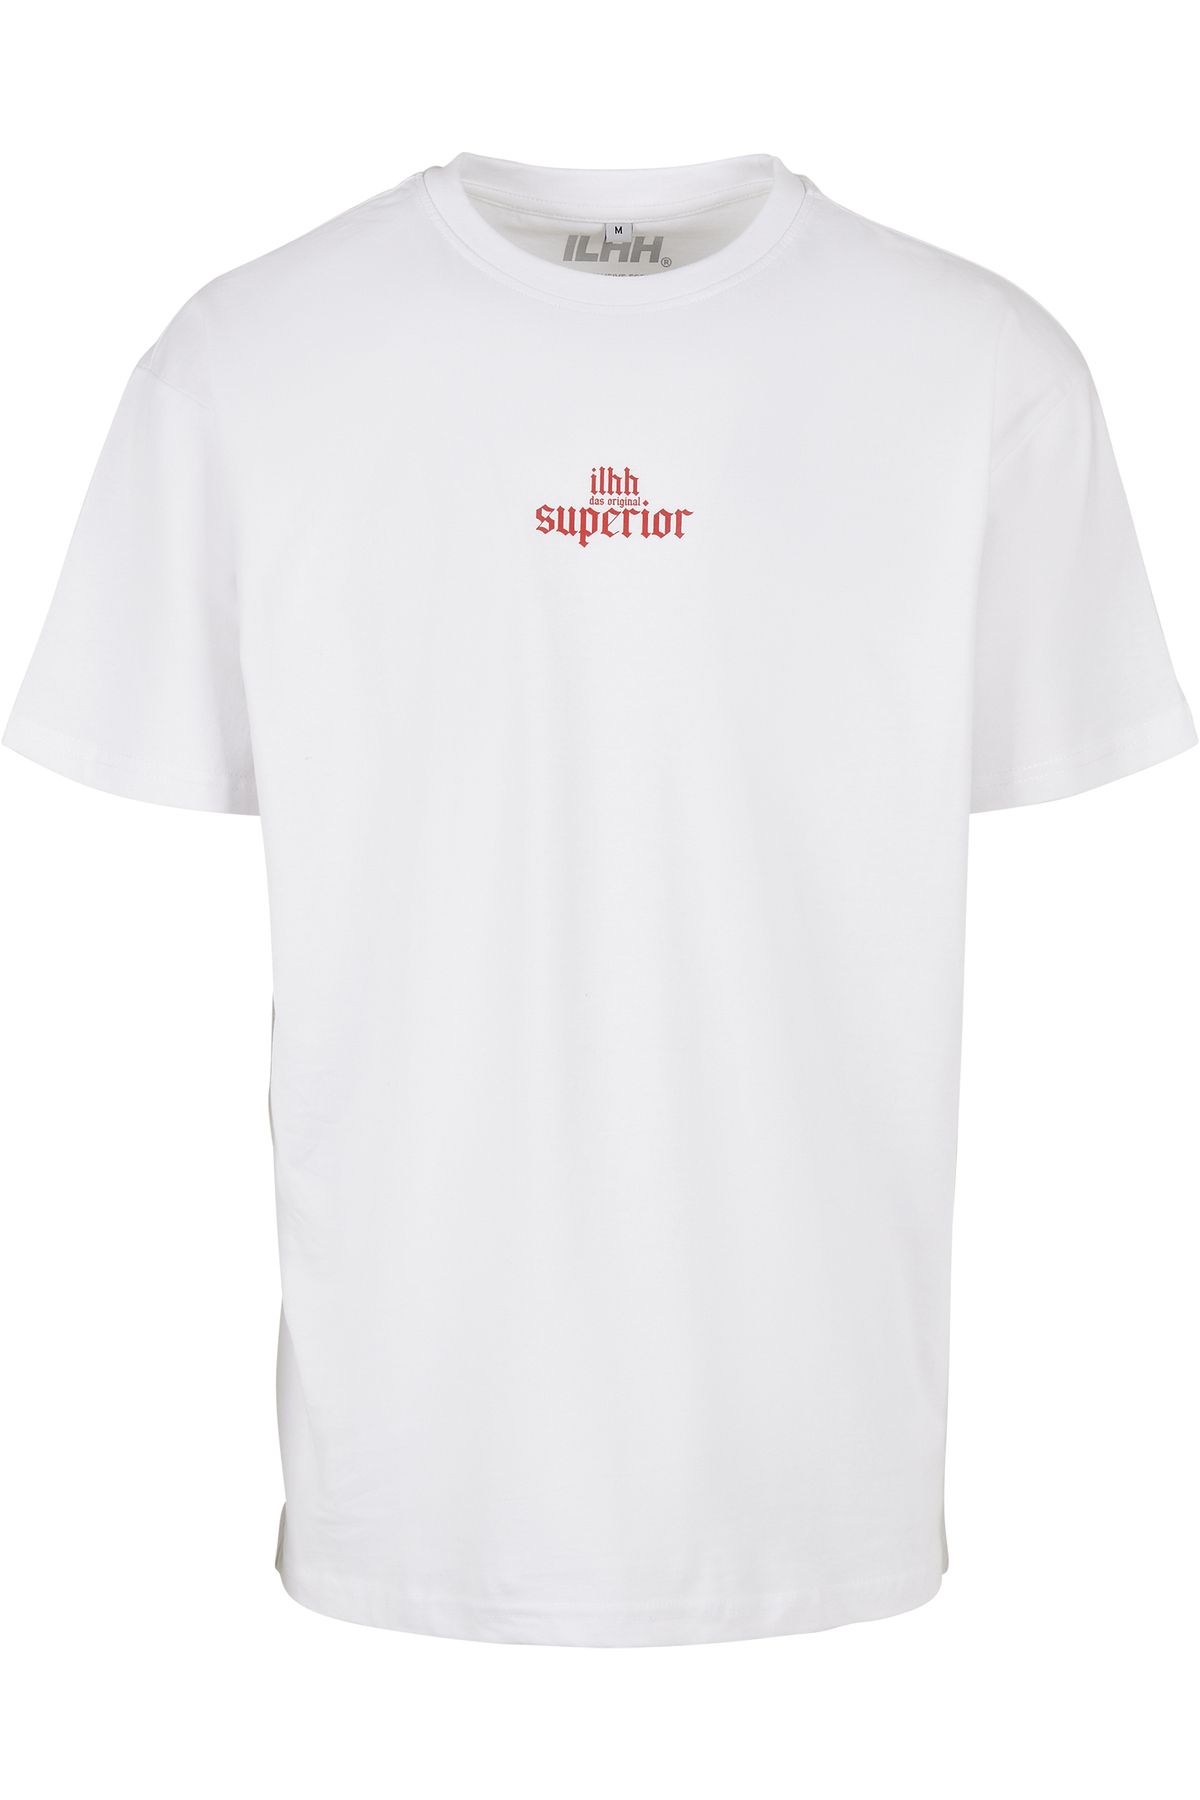 Trendyol - - Weiß ILHH T-Shirt Regular - Fit